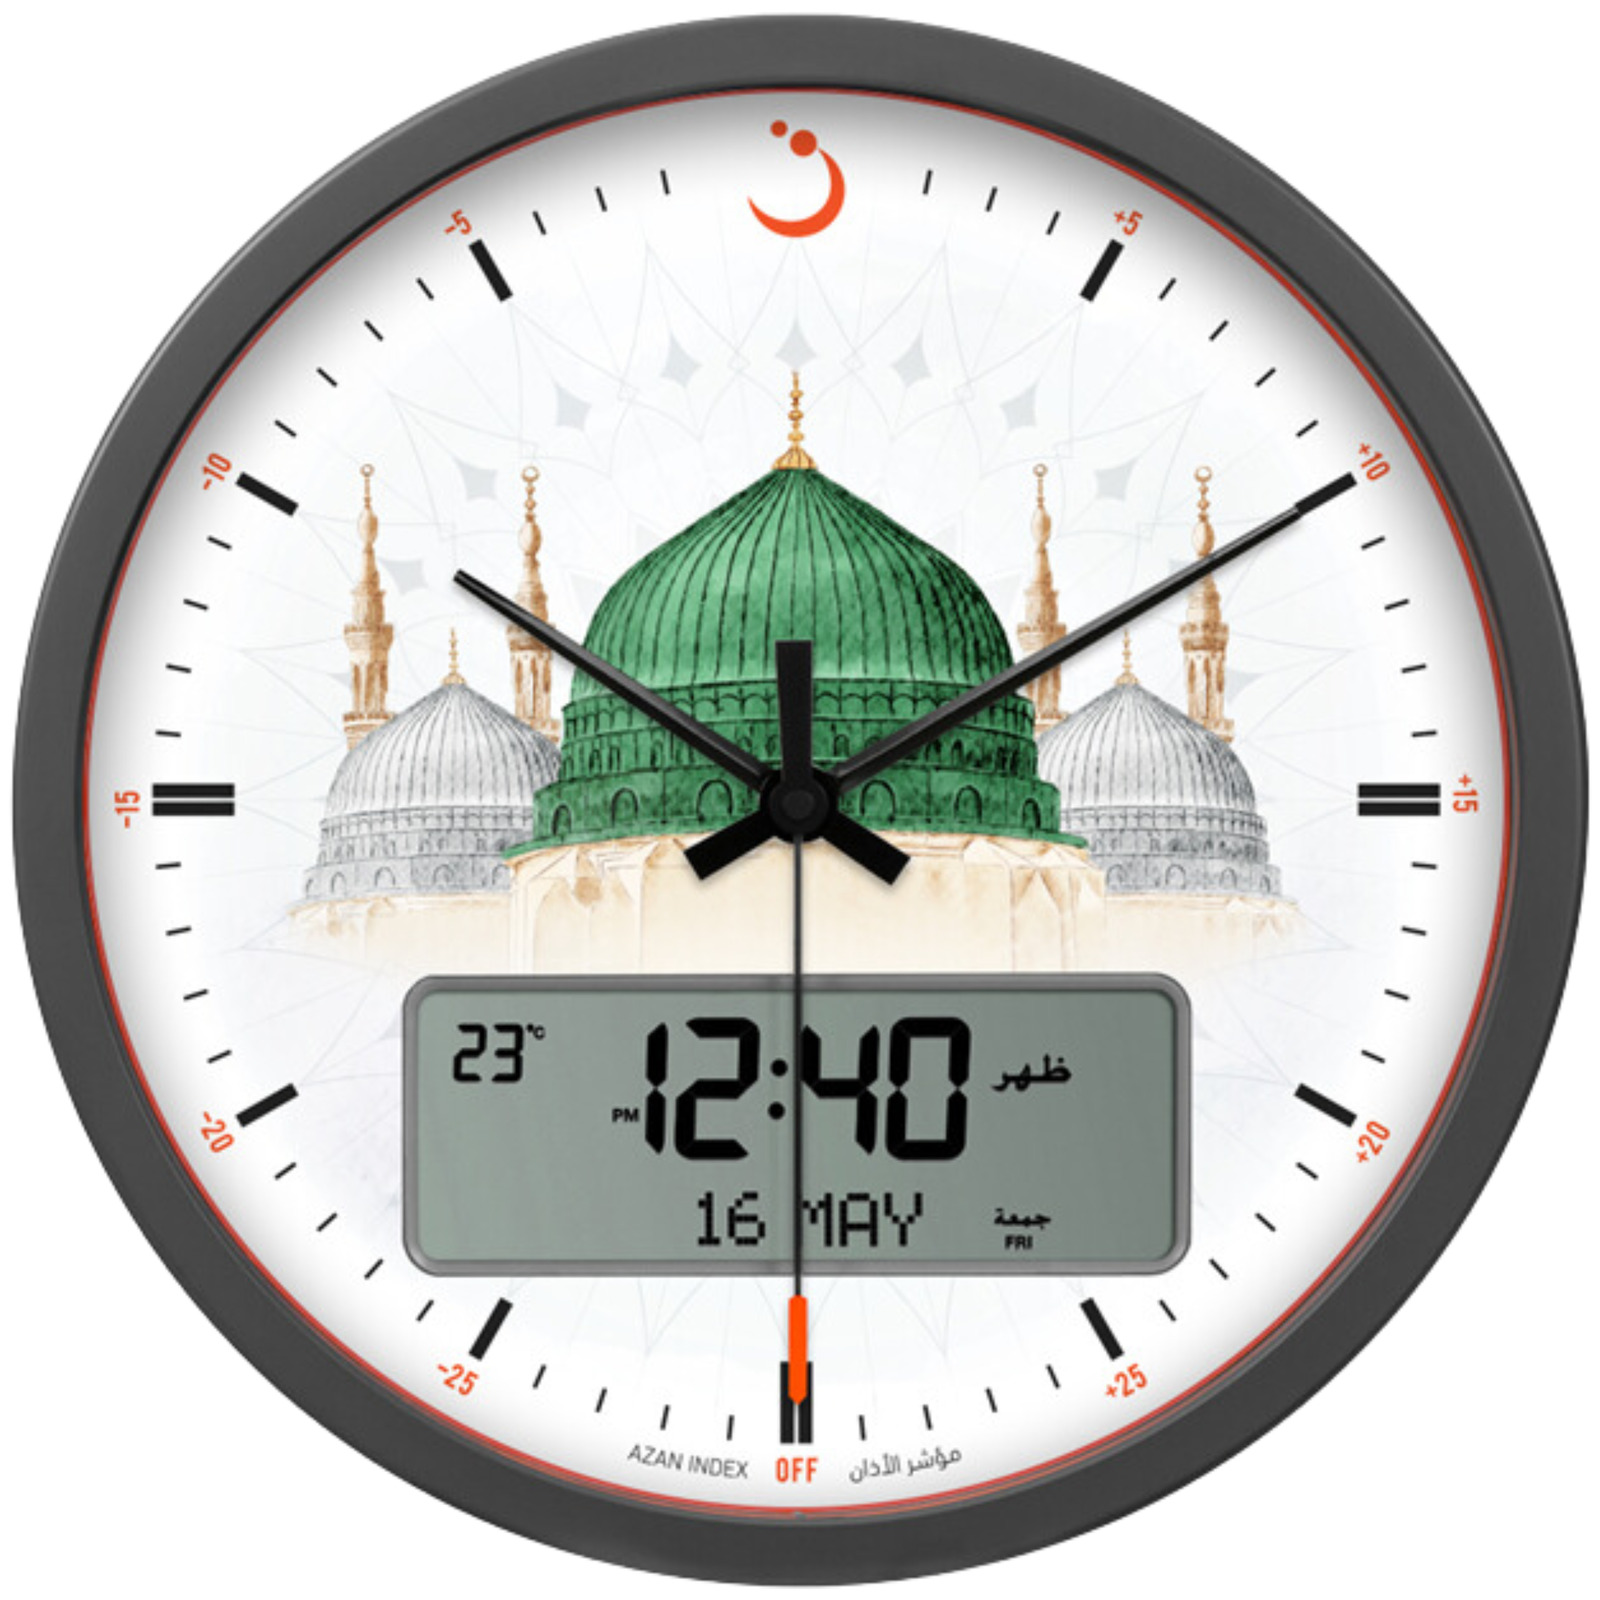 Alfajr Madinah Azan Prayer Clock Round Wall Ana-Digital Automatic Muslim CR-23M